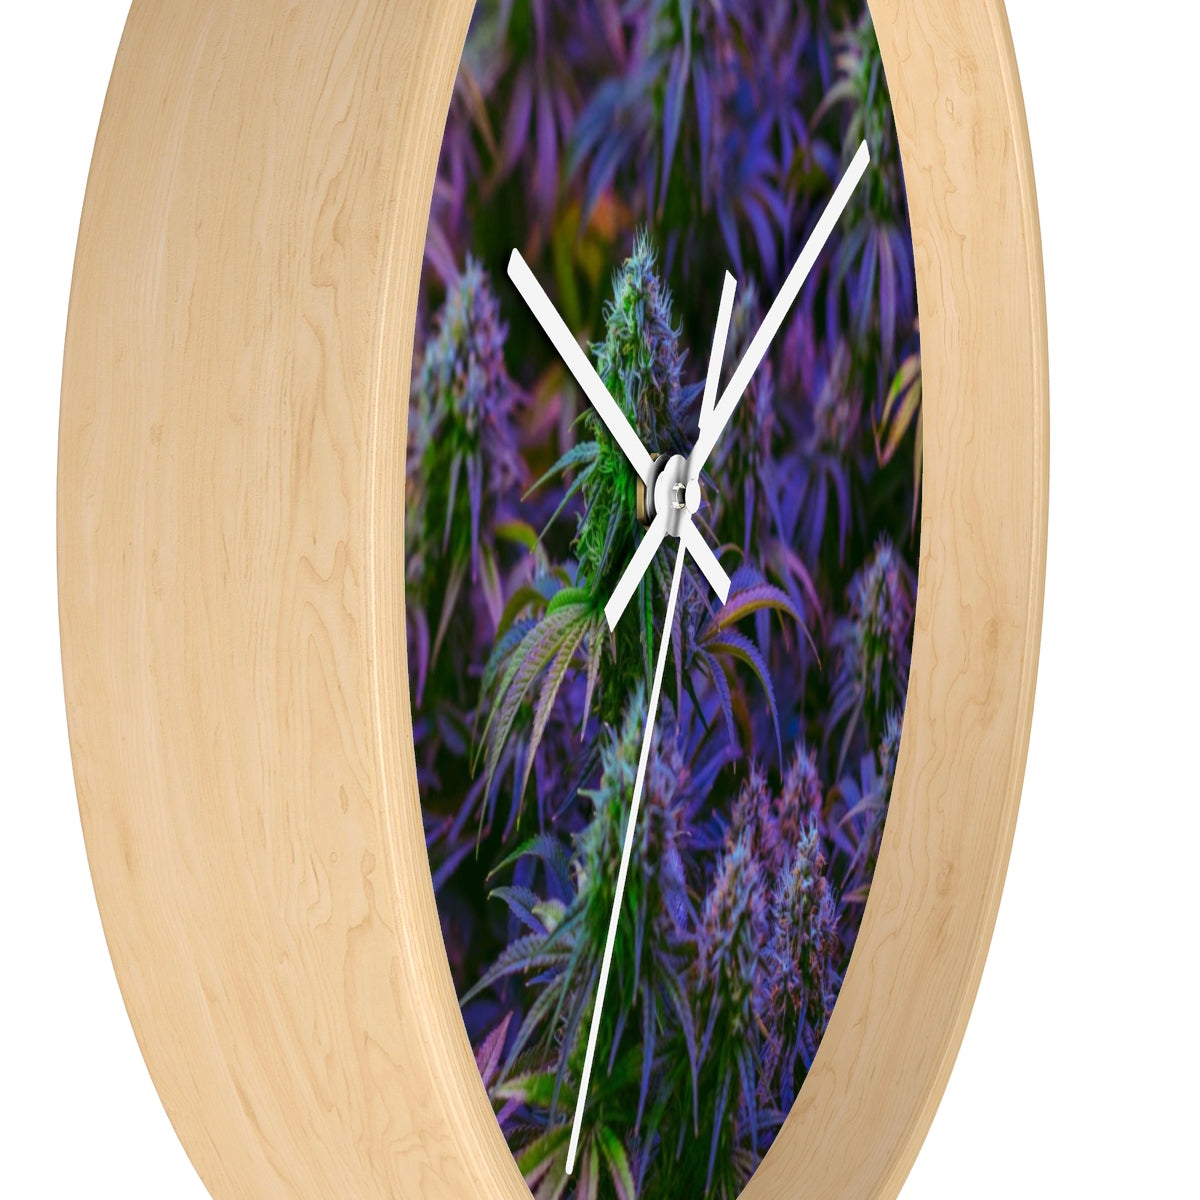 The Purple Cannabis Wall Clock